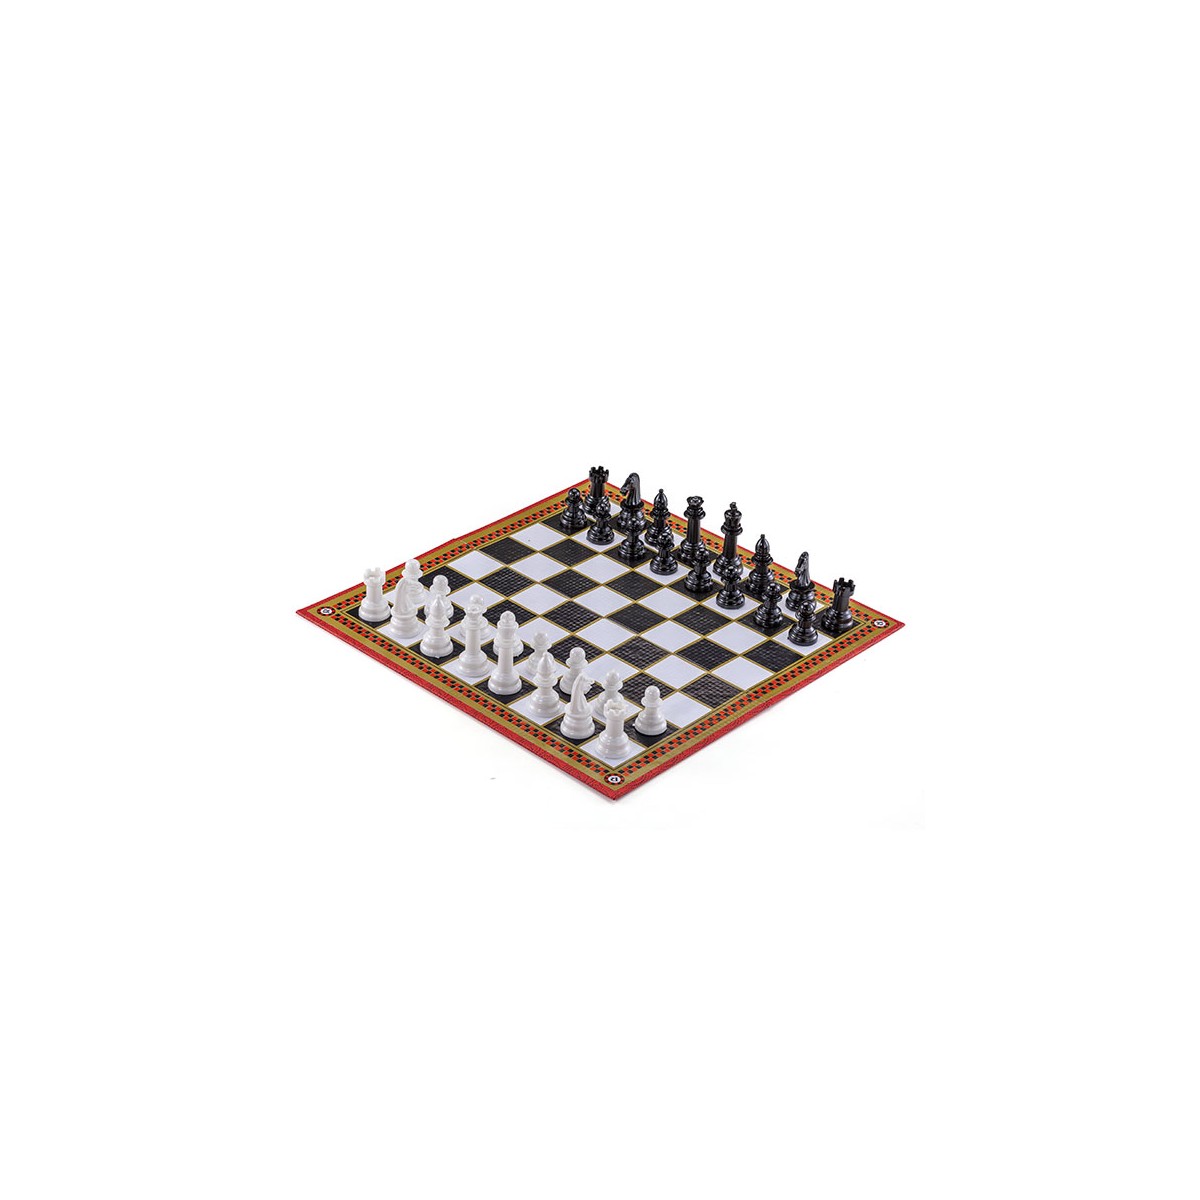 Ruibal 2050 ajedrez linea green box